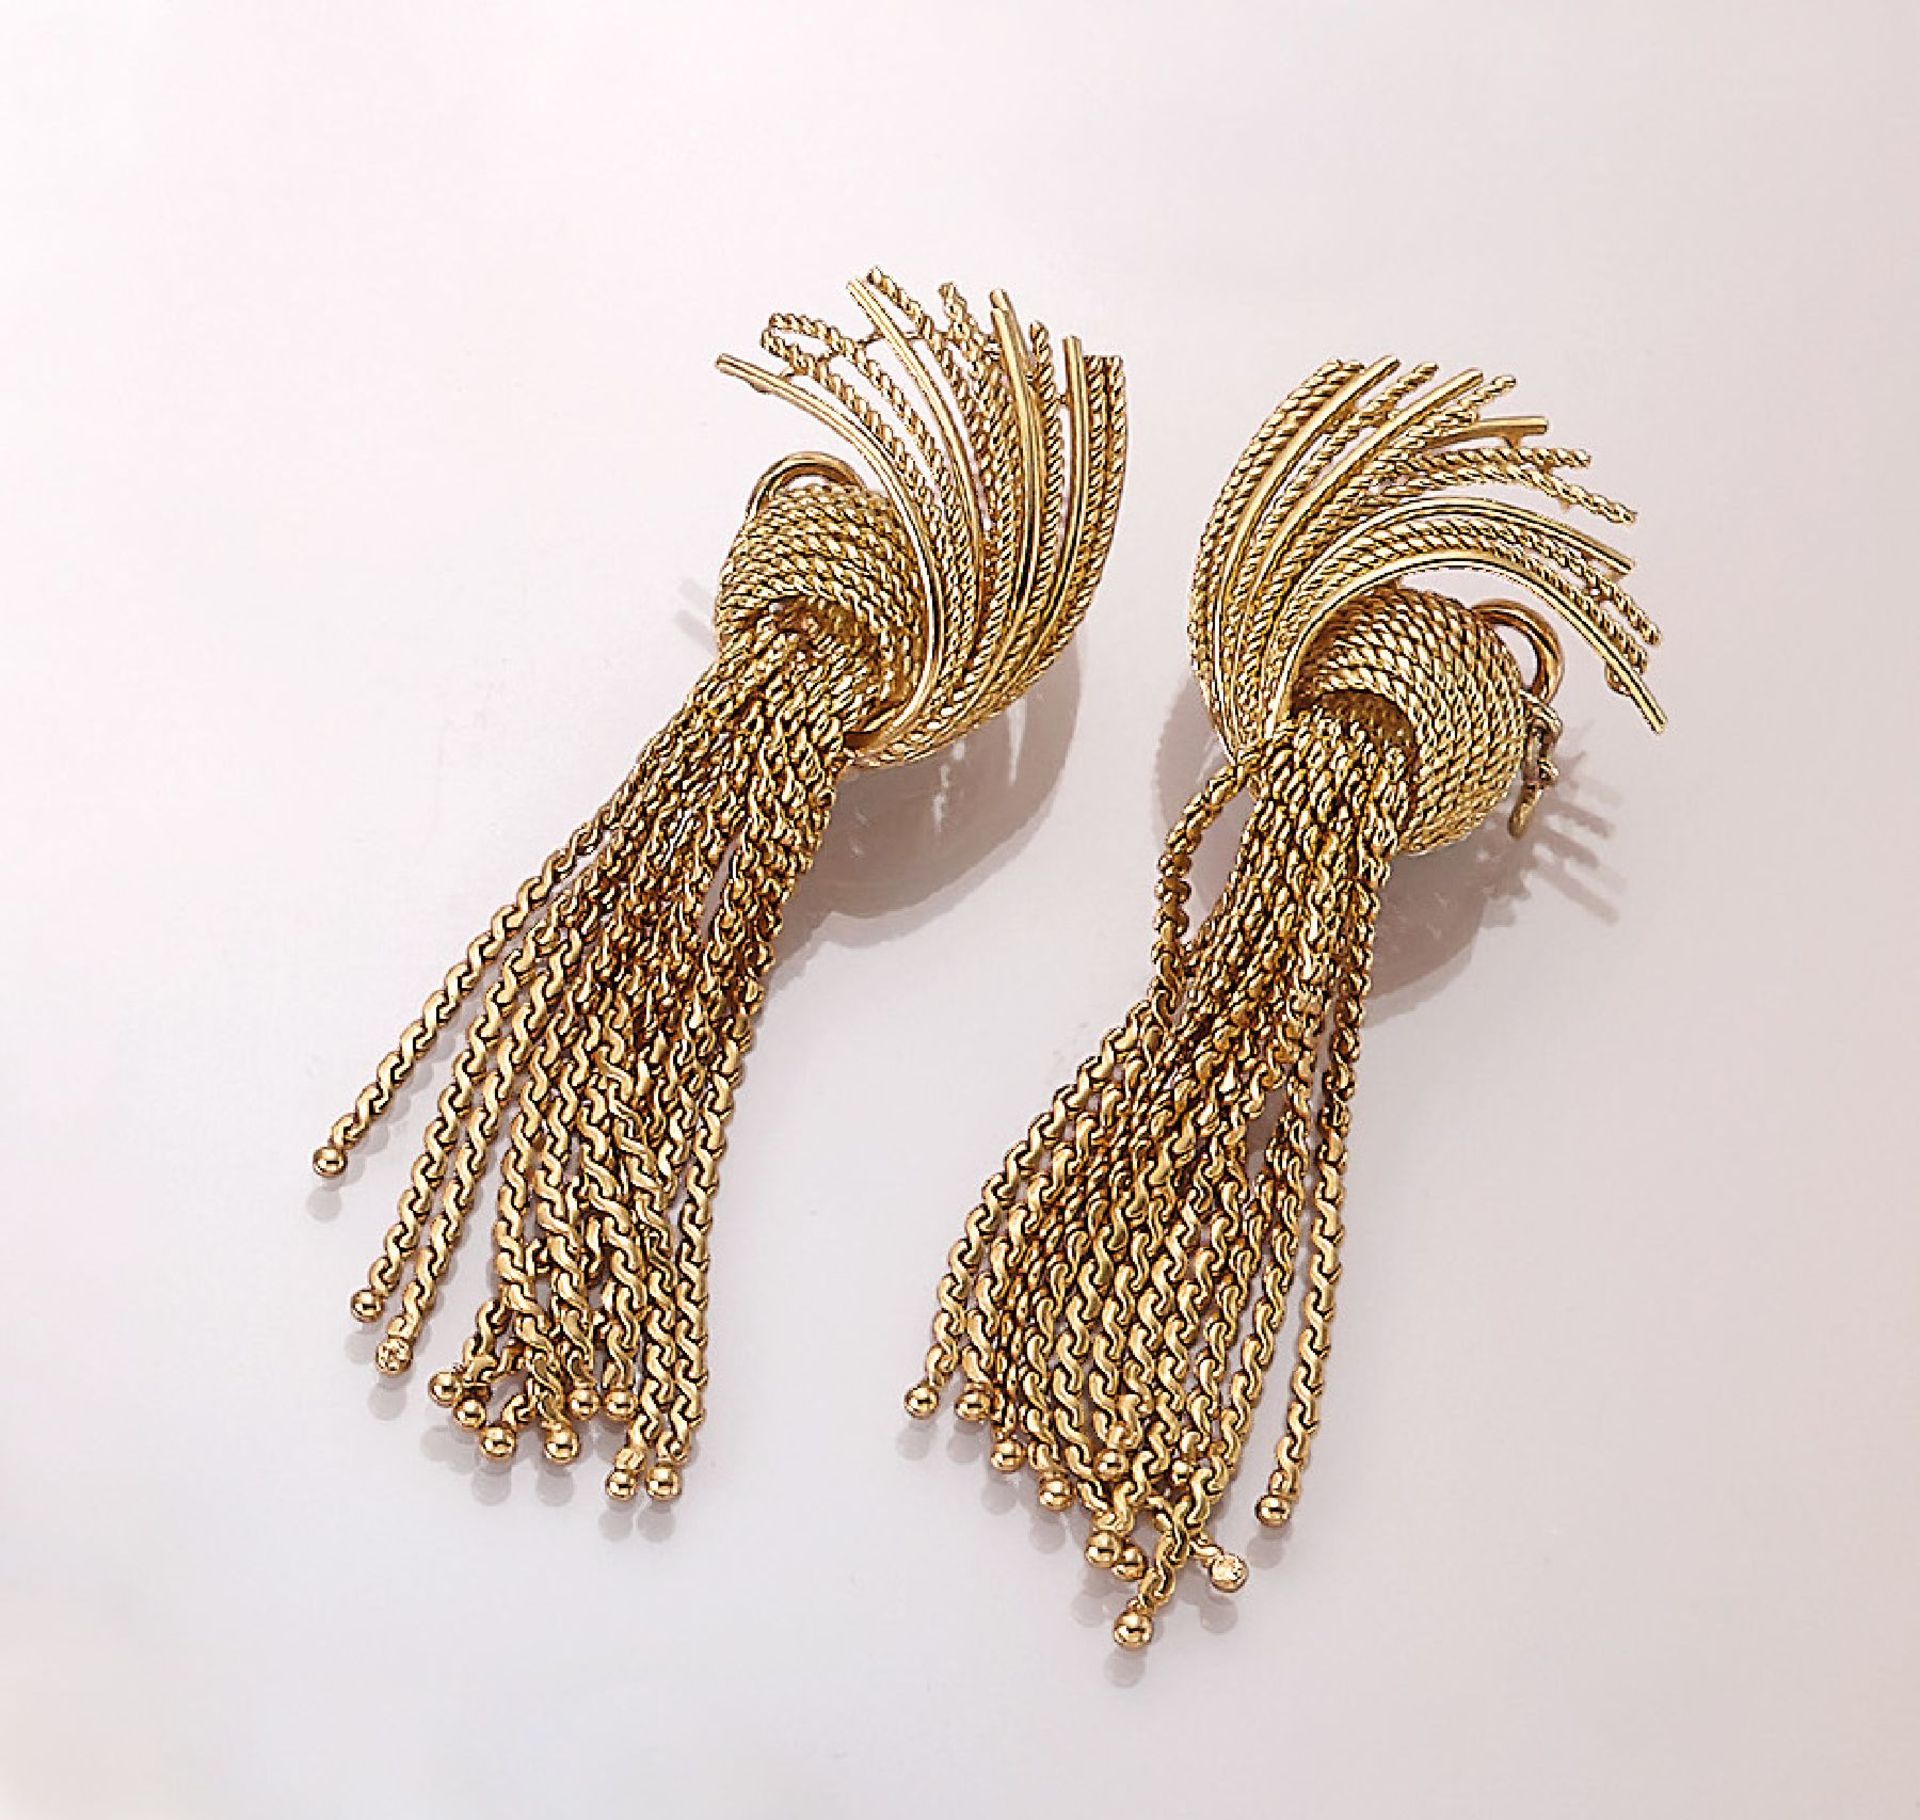 Pair of 18 kt gold RENE KERN earrings , YG 750/000, cord design, tassel suspensions, l. approx. 6